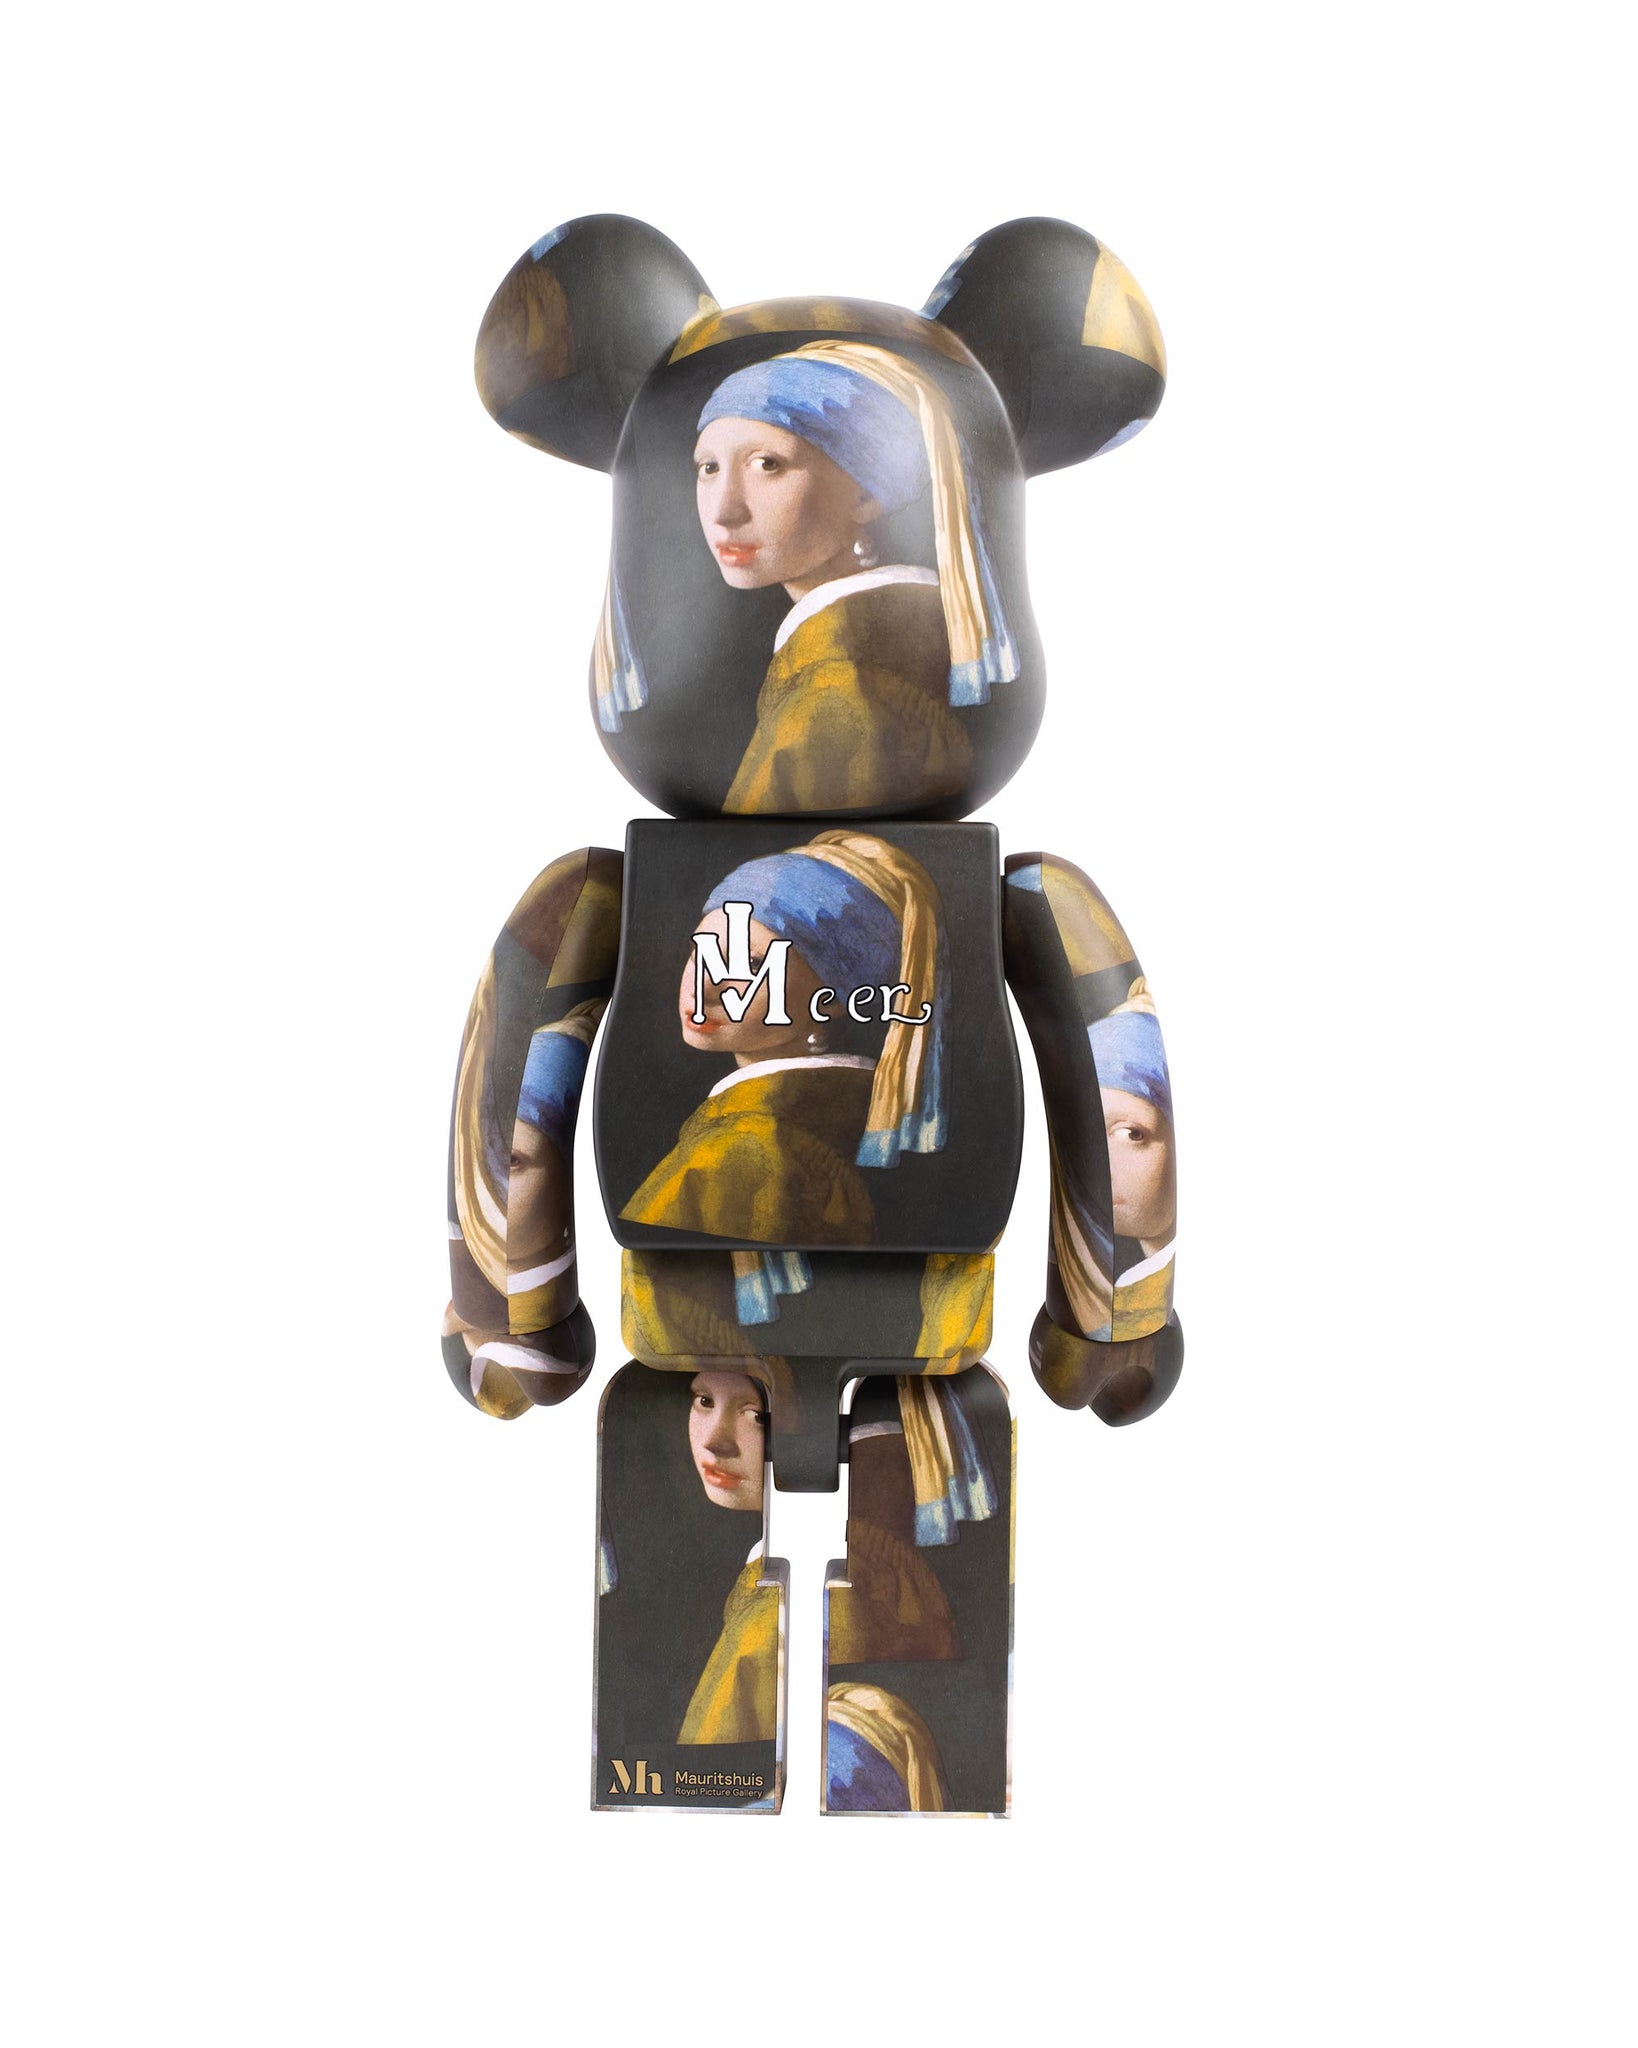 Medicom Toy Johannes Vermeer (Girl with a Pearl Earring) 1000% Bearbri